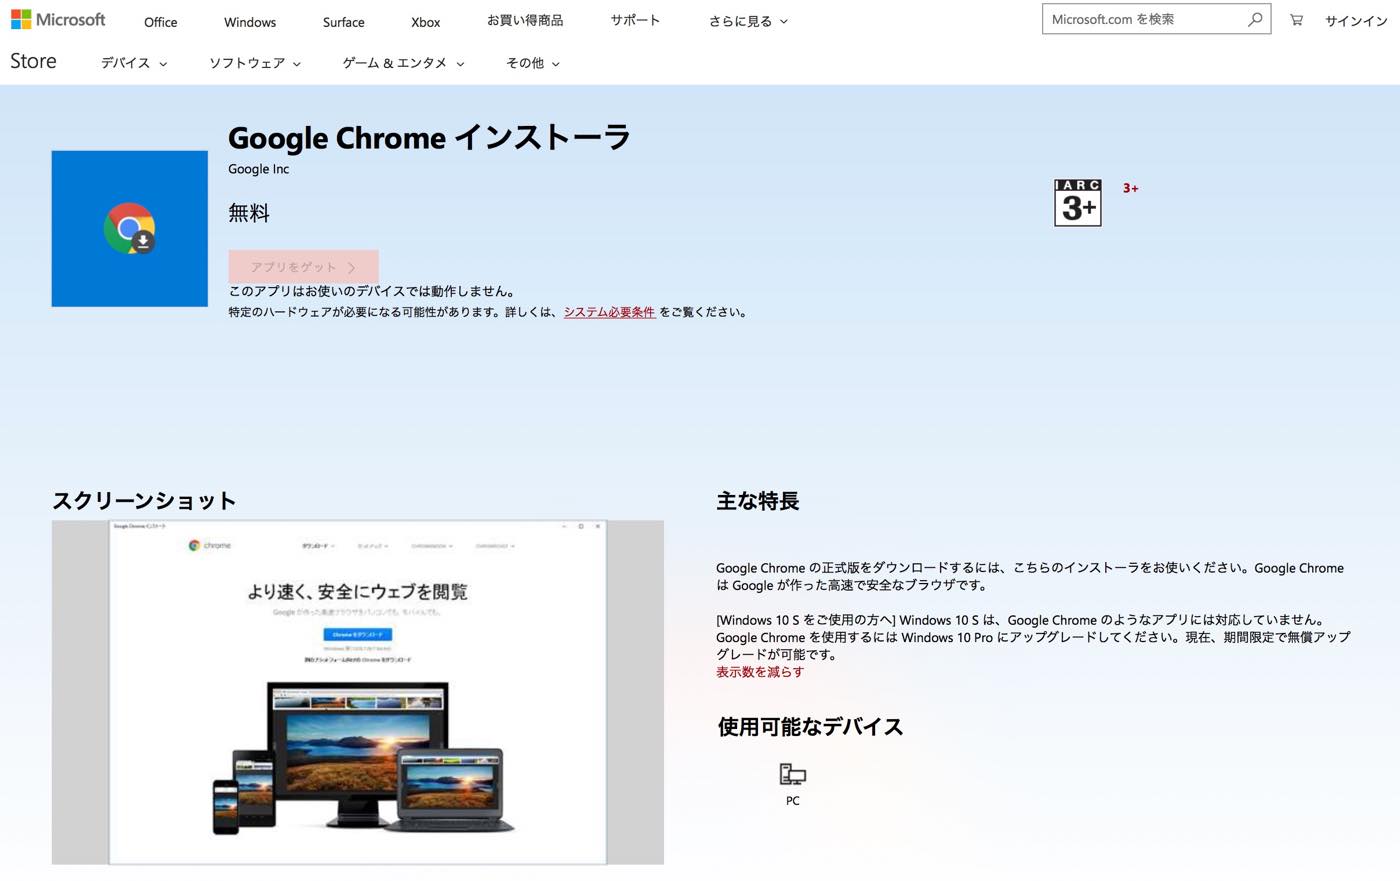 Google、Microsoftストアで｢Google Chrome インストーラ｣を提供開始